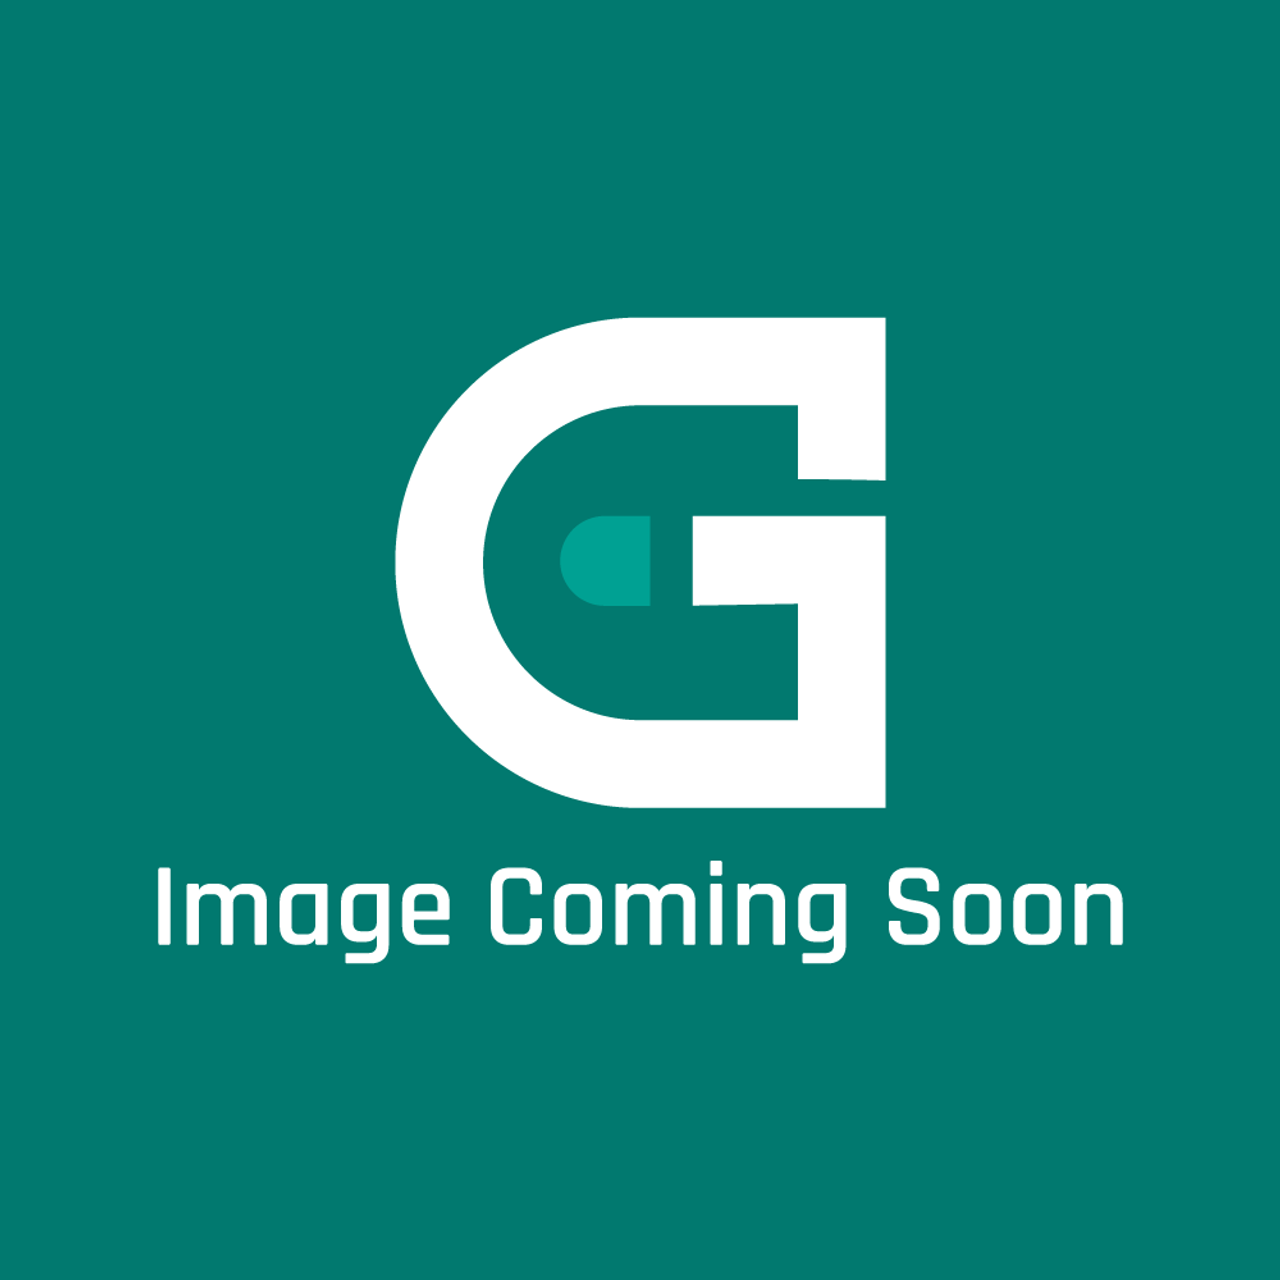 GE Appliances 11X28 - 104112-06 C0 Zp25K6E-Pfv-830 230V-1 - Image Coming Soon!